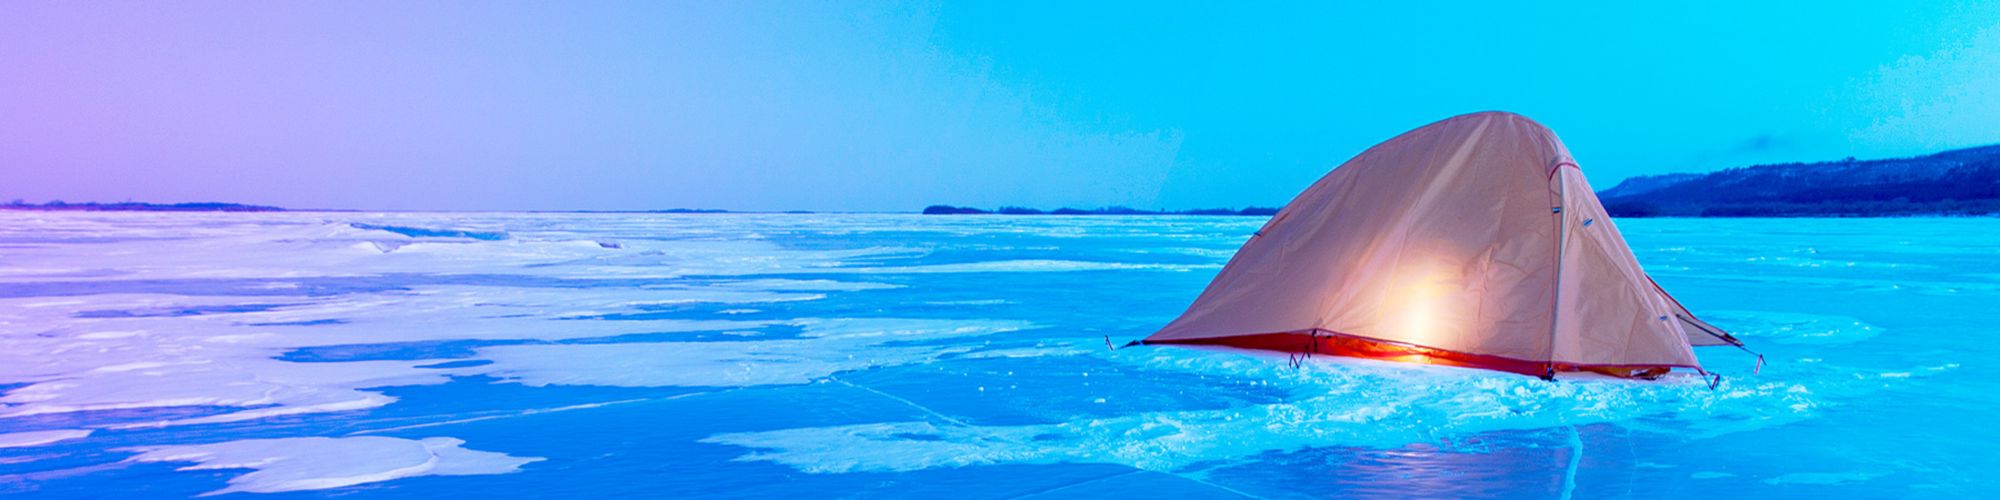 Tent on a frozen lake